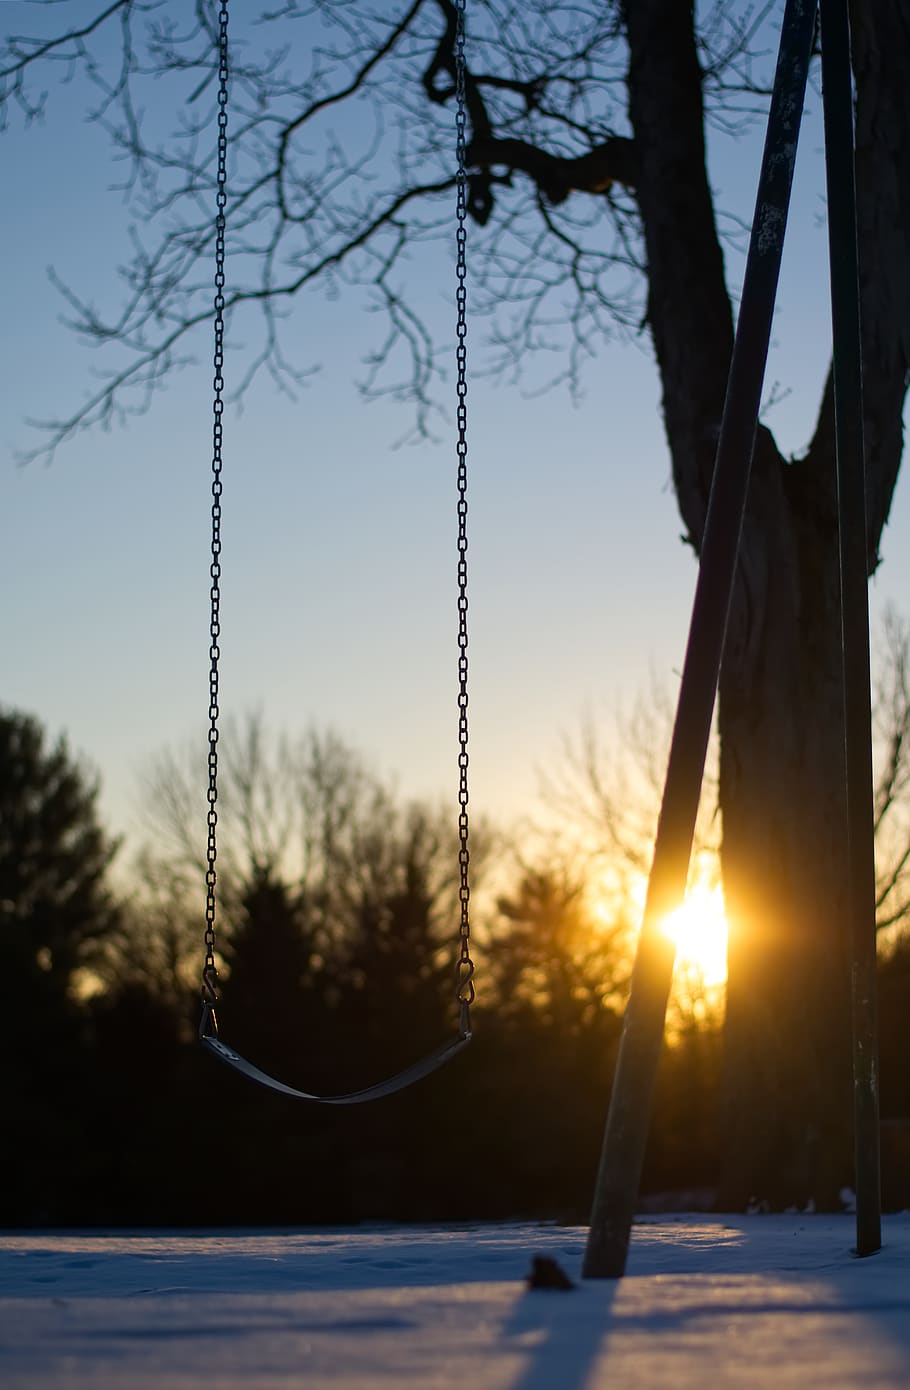 empty swing during golden hour, flare, light, sunlight, outdoors